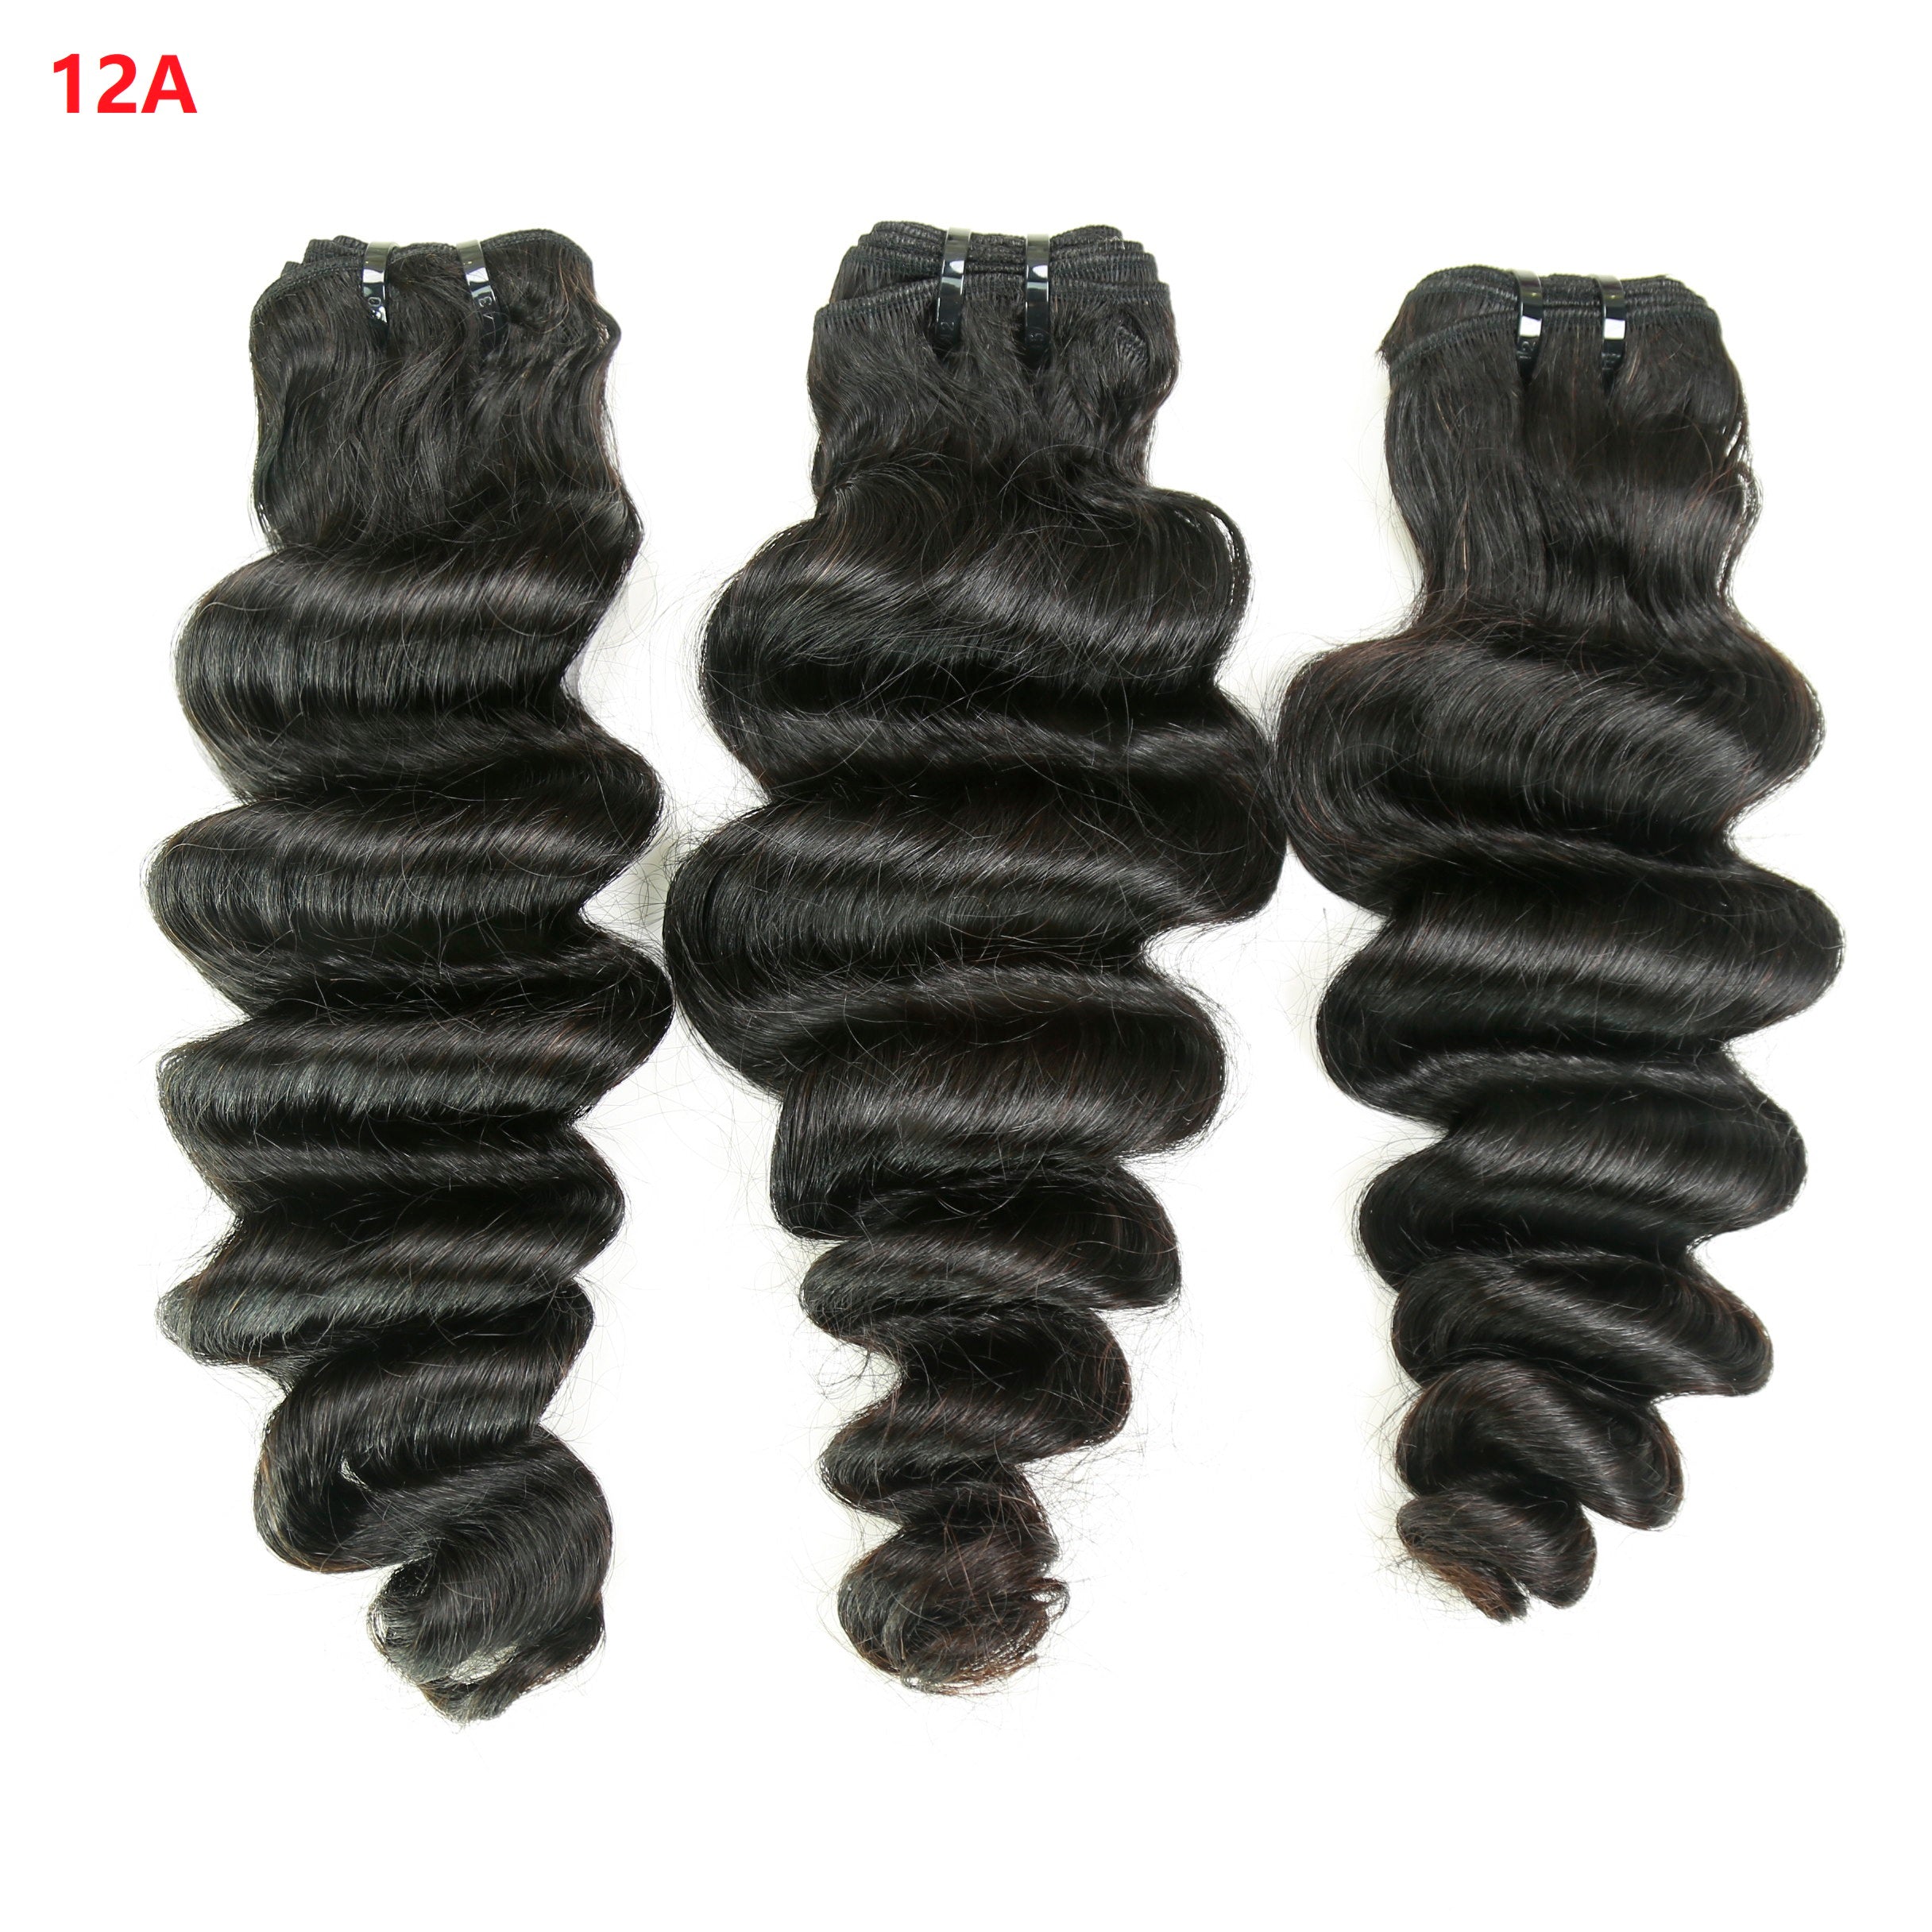 JP Hair 9A/10A12A Loose Deep 3 Bundles Human Hair With with 6x6 HD Closure